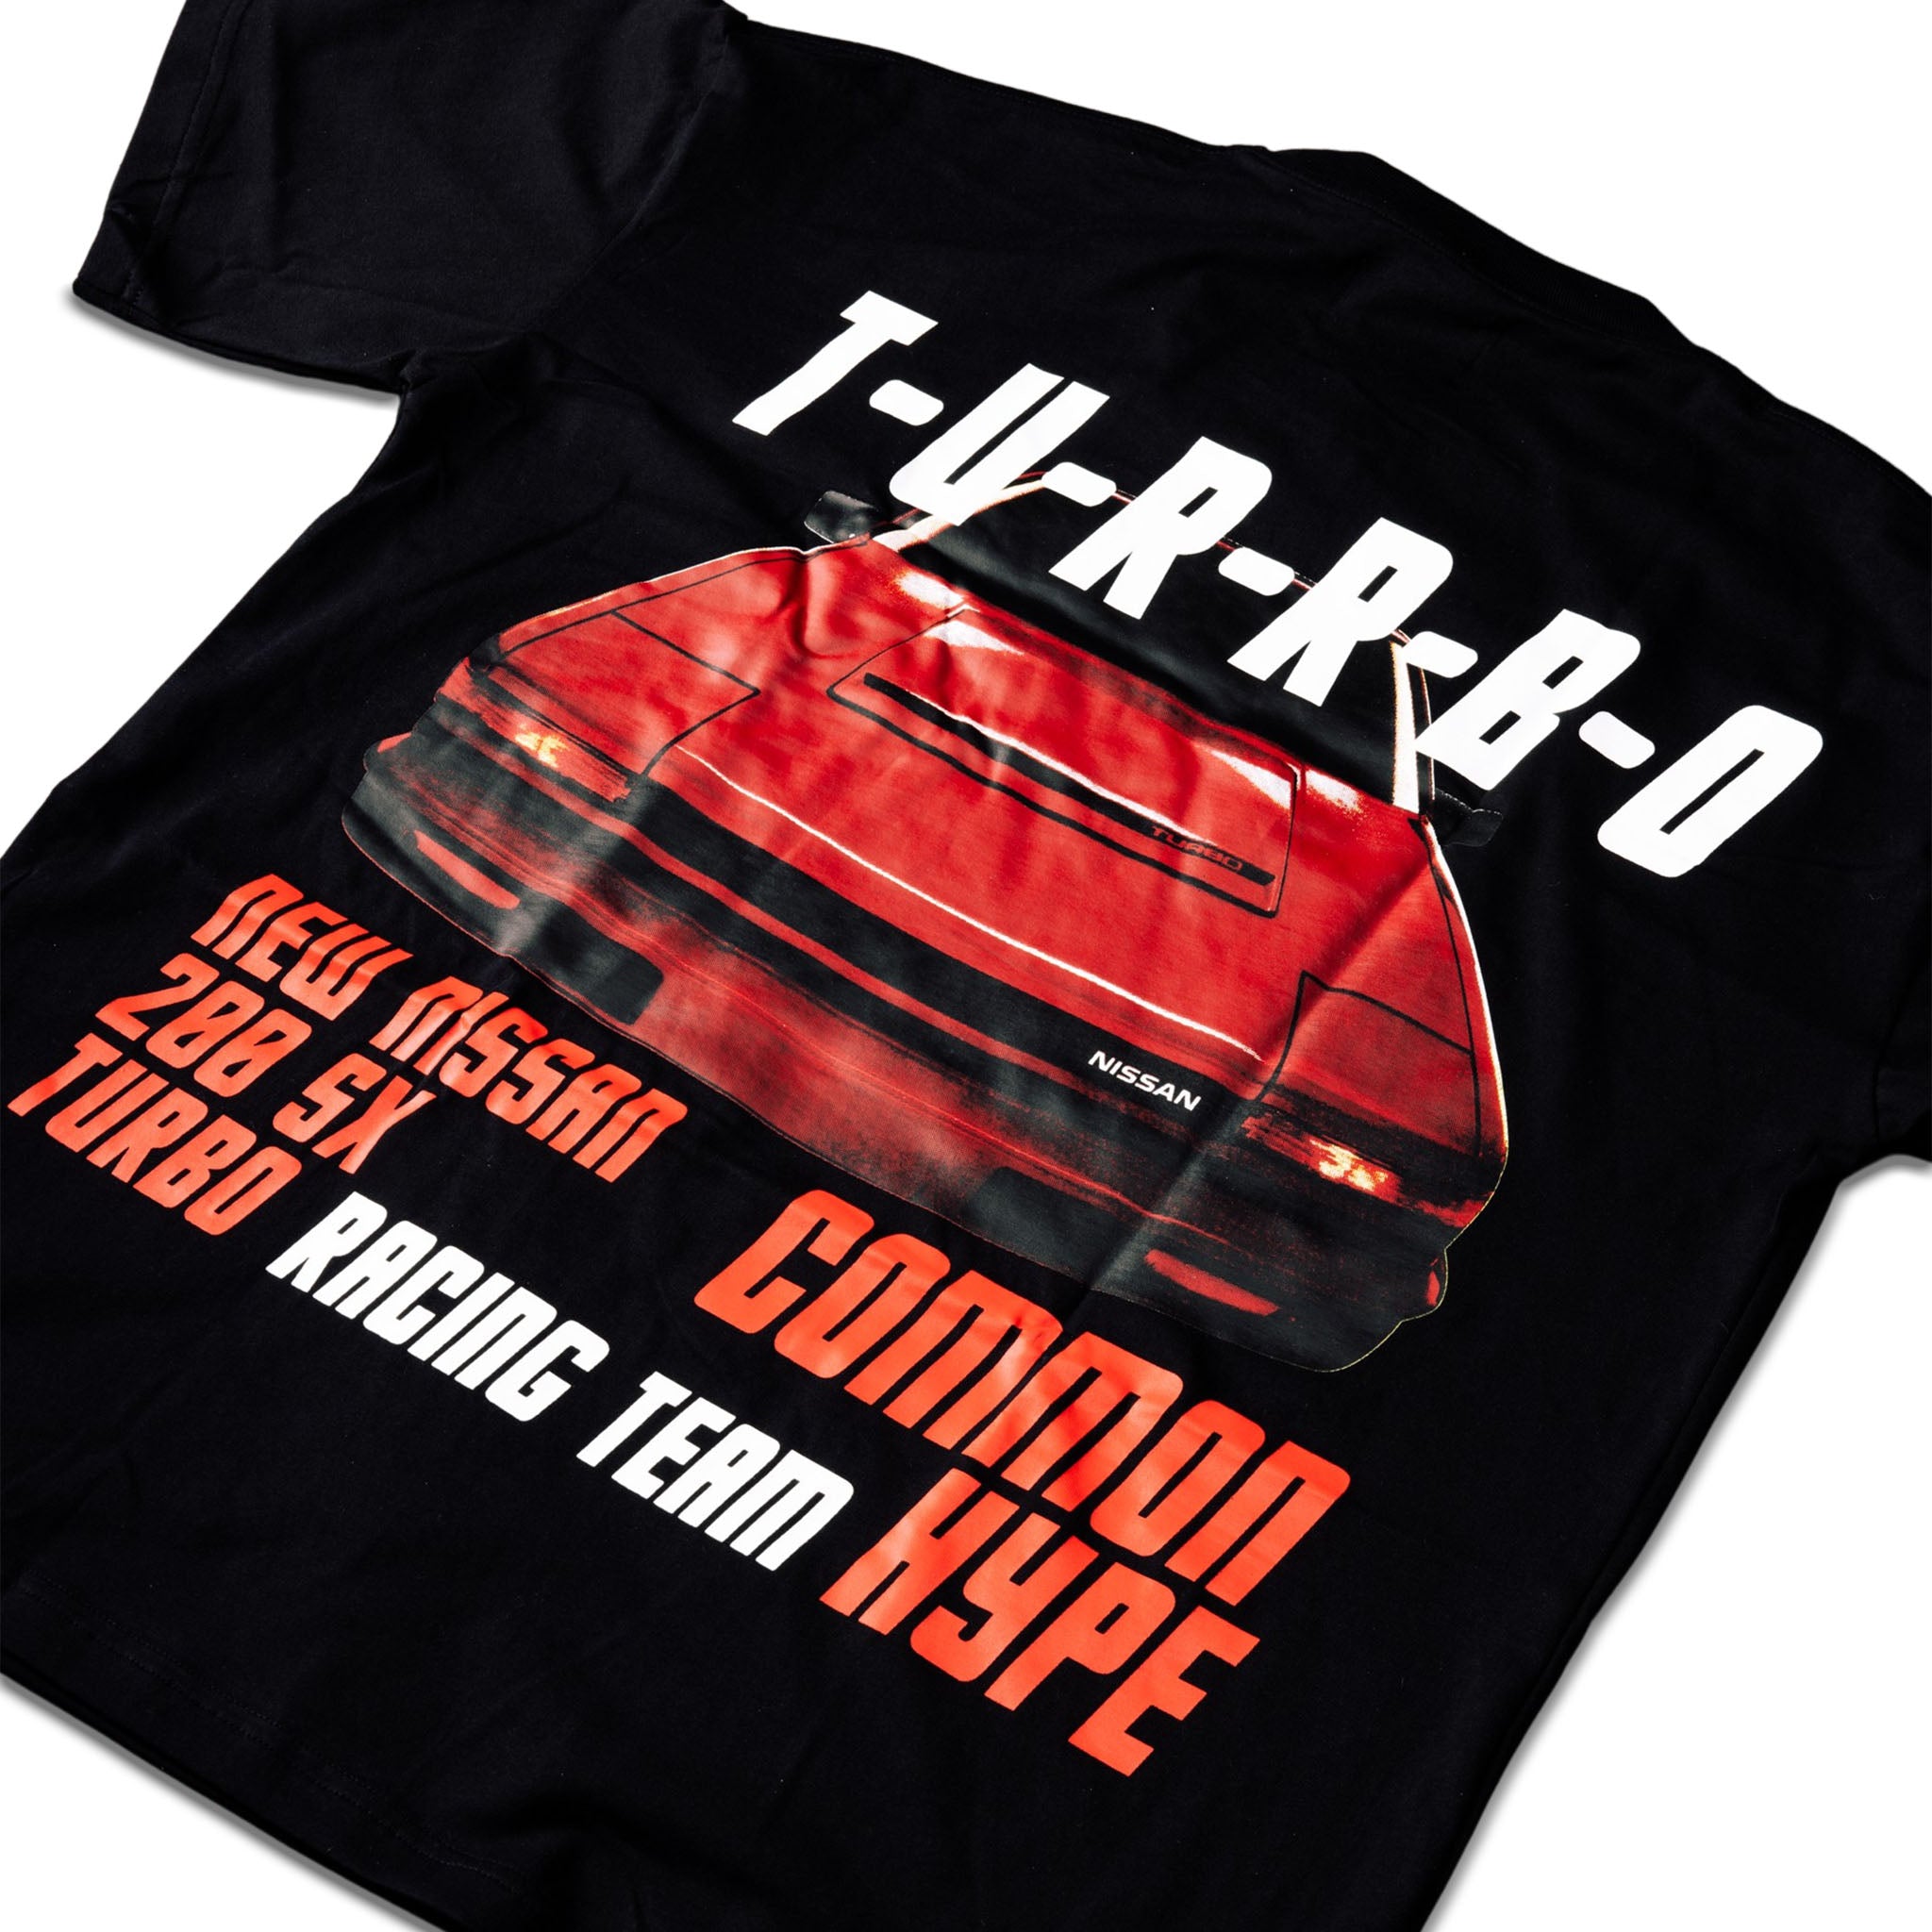 Common Hype Turbo Racing Team Tee Black